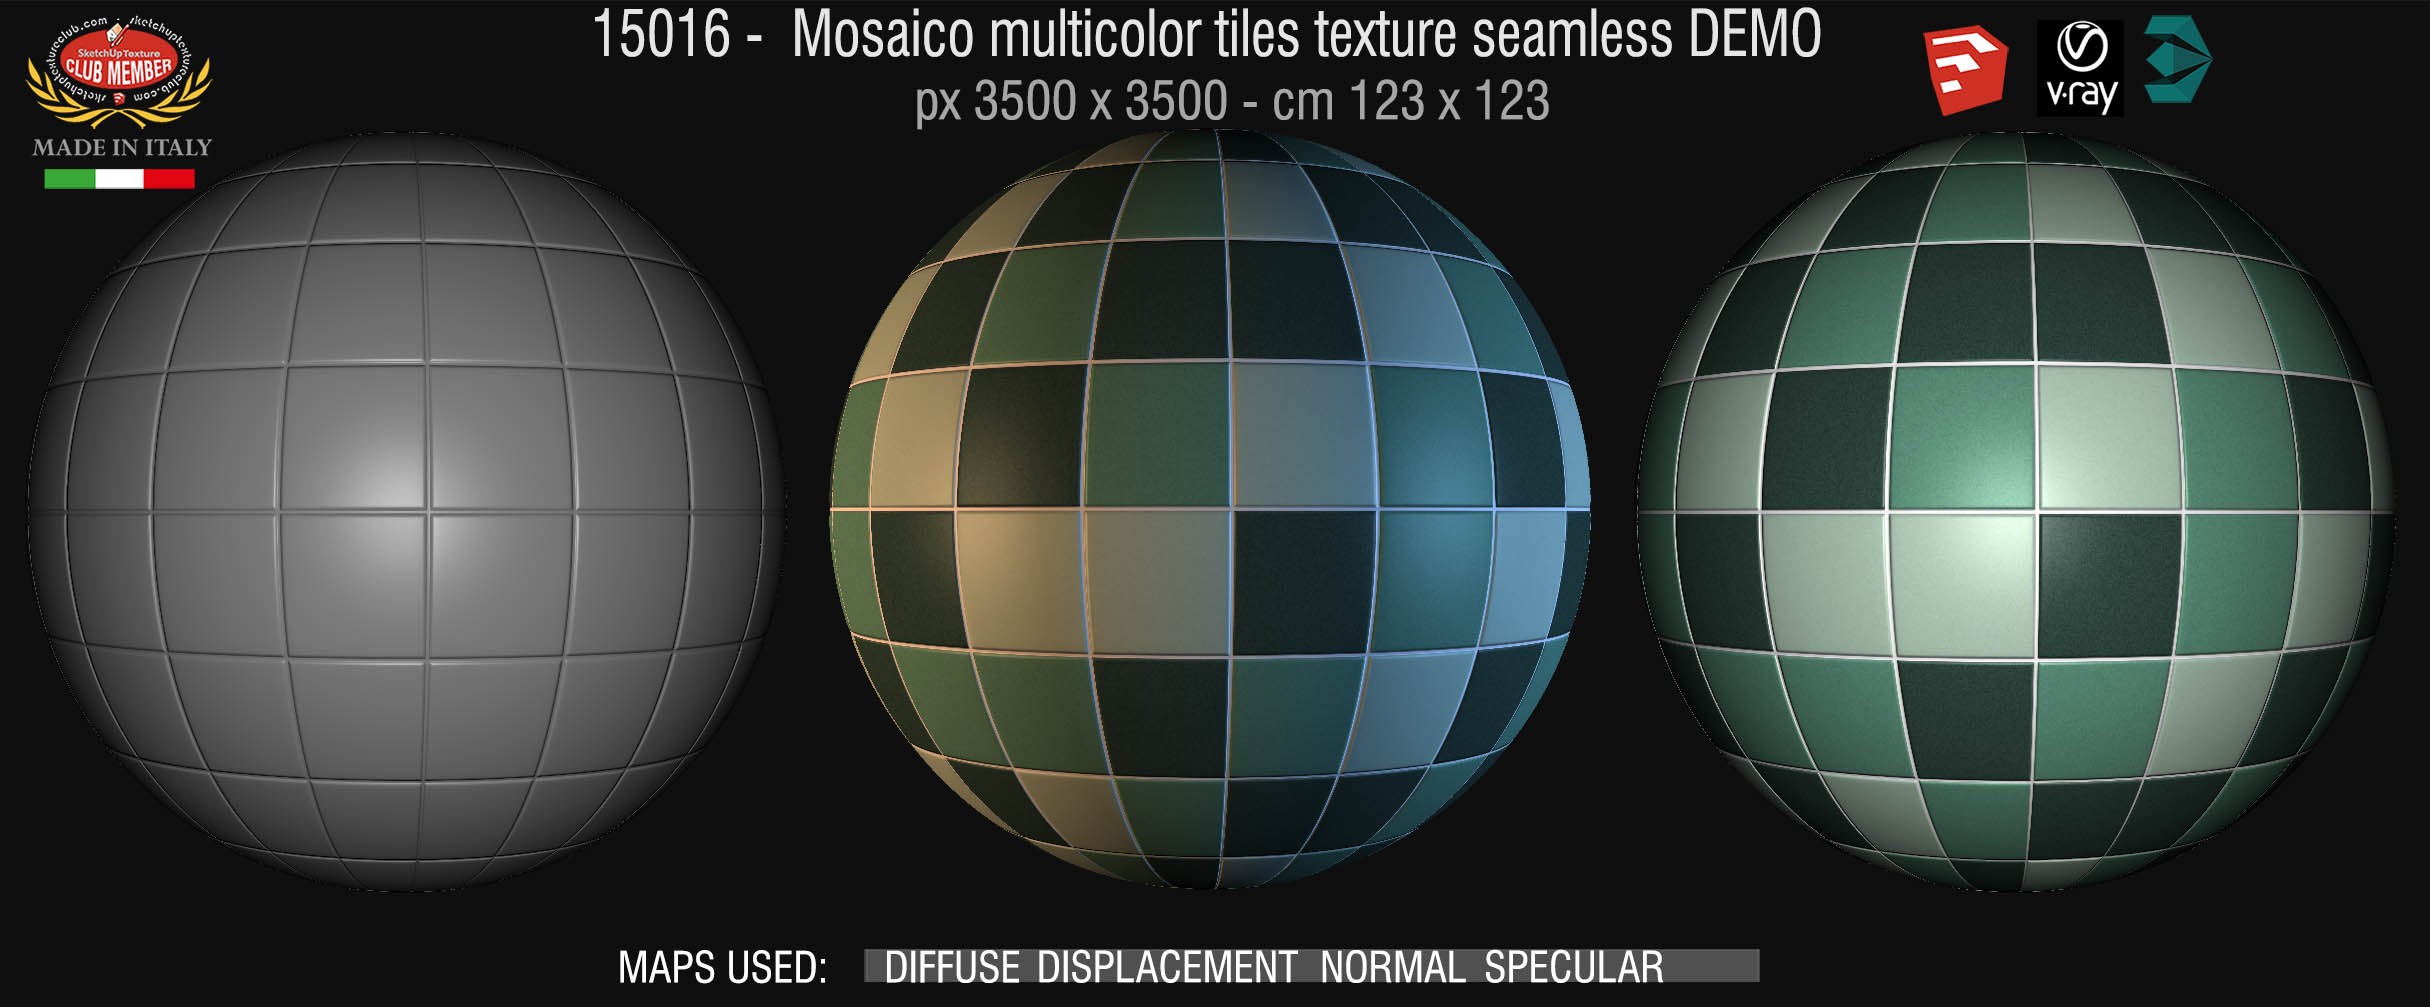 15016 Mosaico multicolor tiles texture seamless + maps DEMO